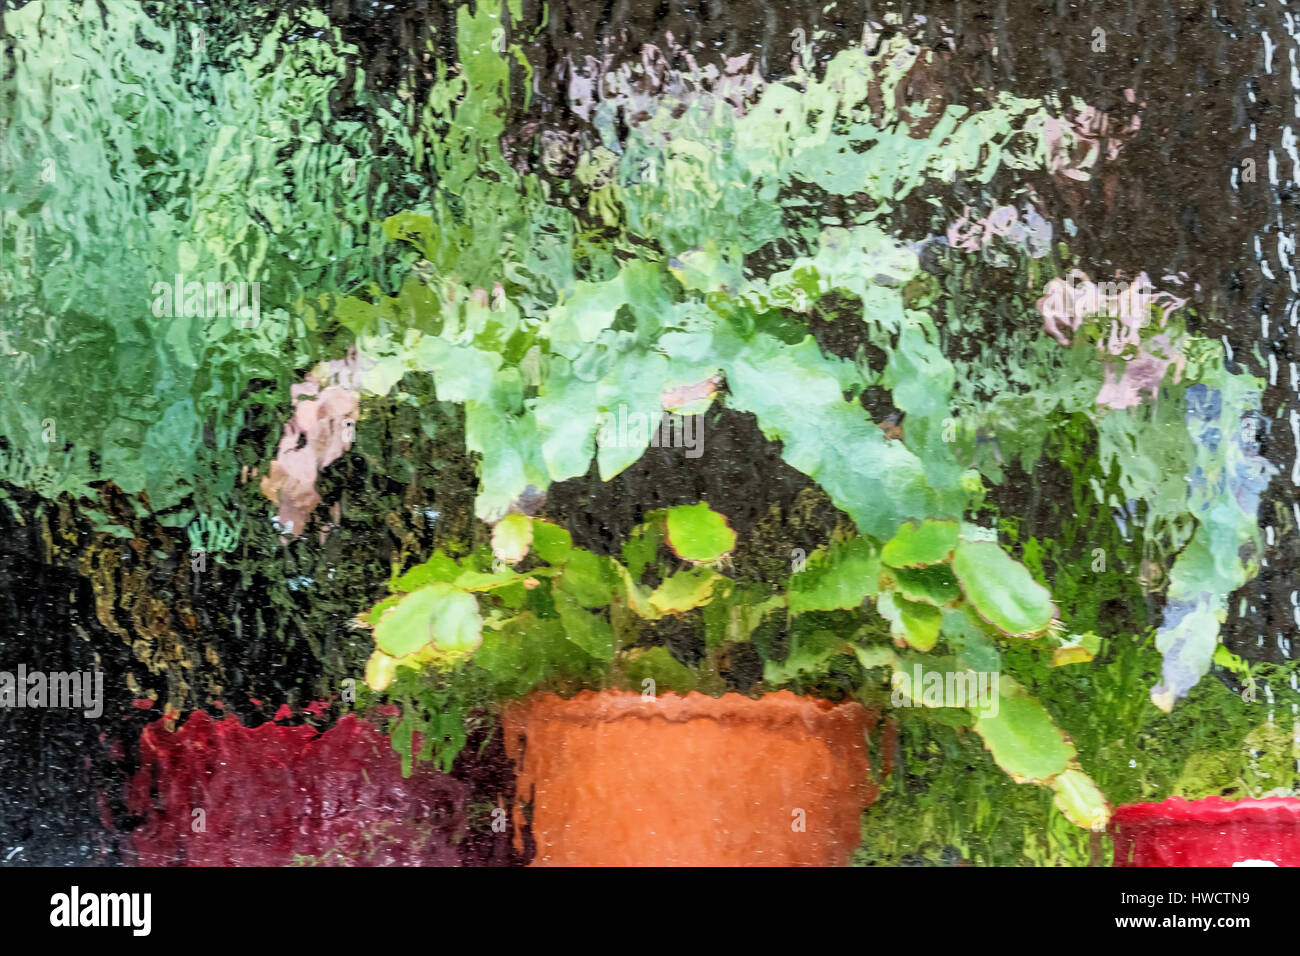 Vasi di piante in serra, simbolo per la protezione, crescita, cura, Topfpflanzen im Gewächshaus, simbolo für Schutz, Wachstum, Pflege Foto Stock